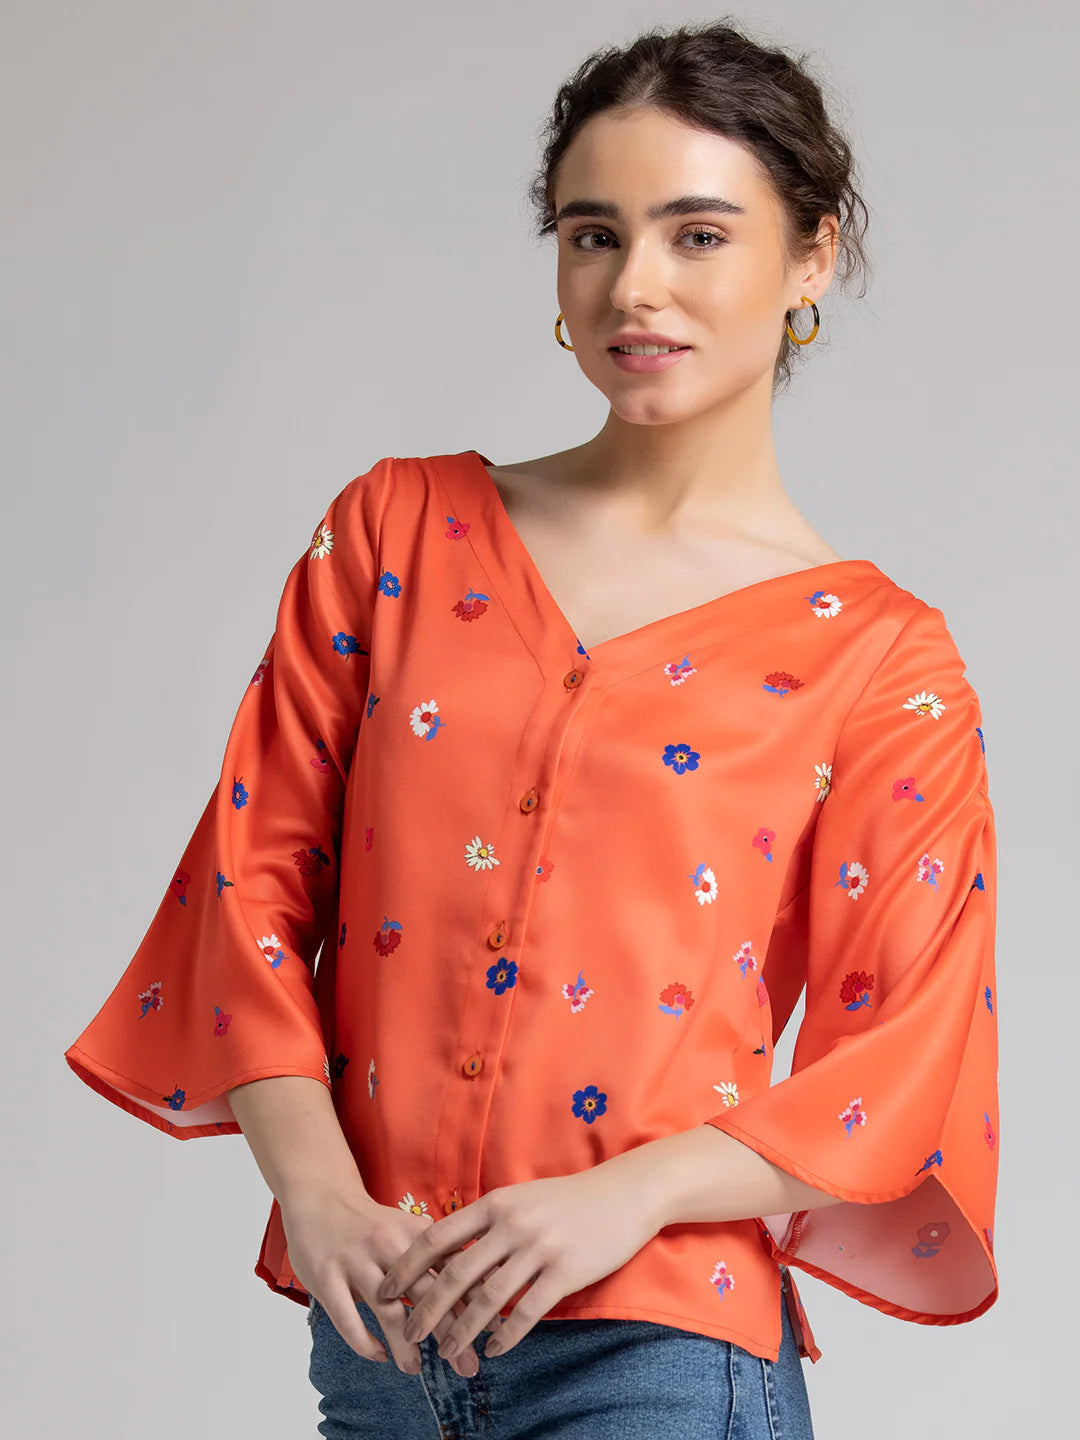 Floral Print Shirt for Women | Vibrant Floral Print Satin Shirt